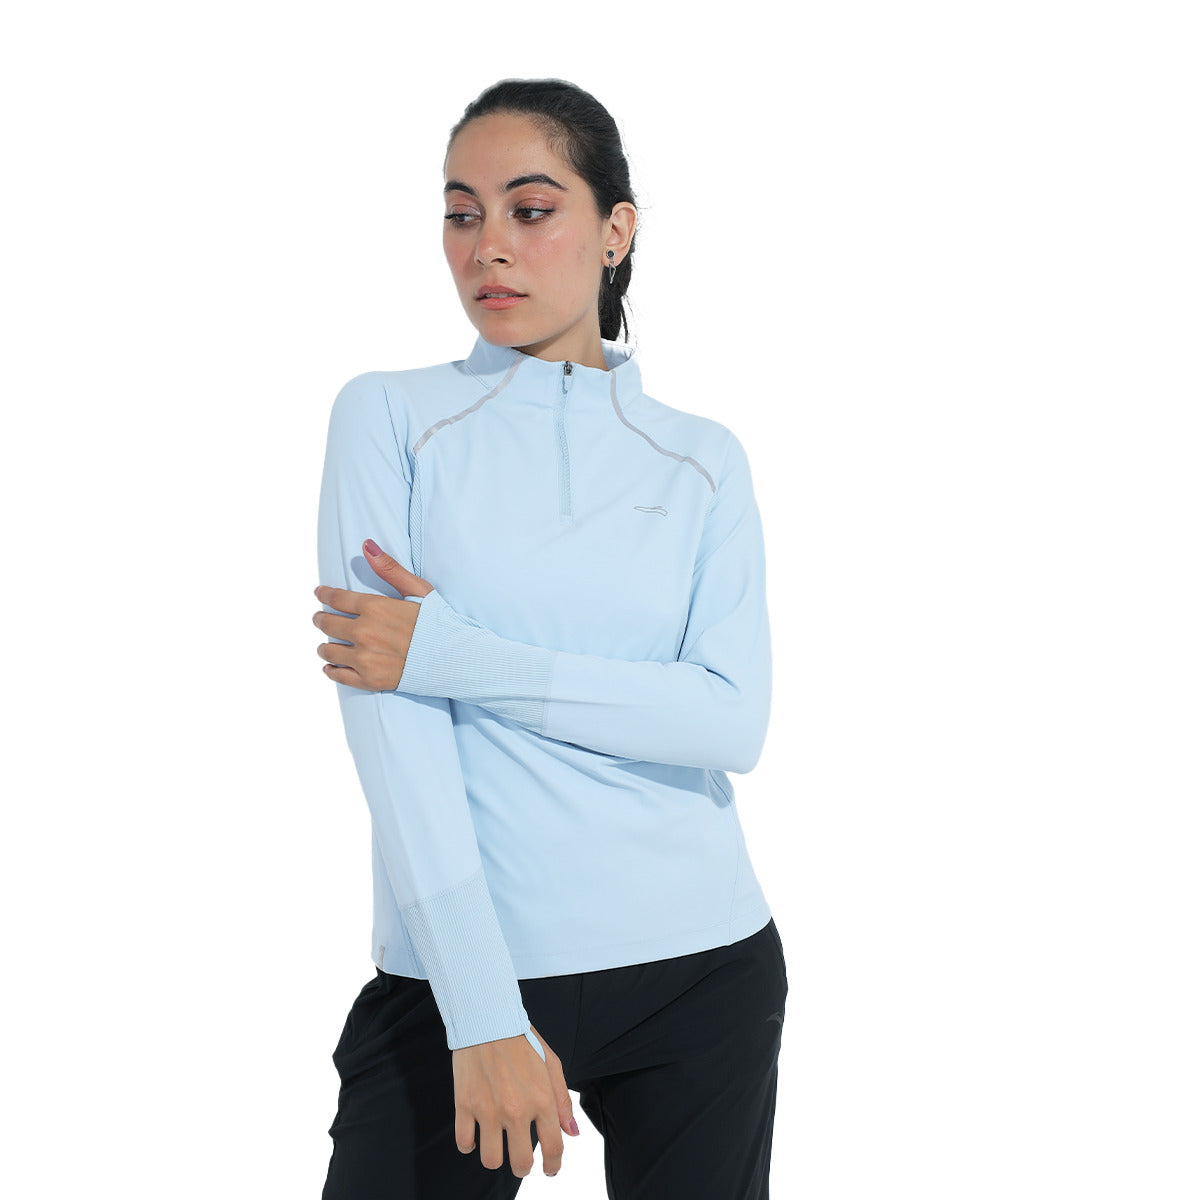 Anta T-Shirt with Long Sleeves & Half-Zipper For Women, Sky Blue